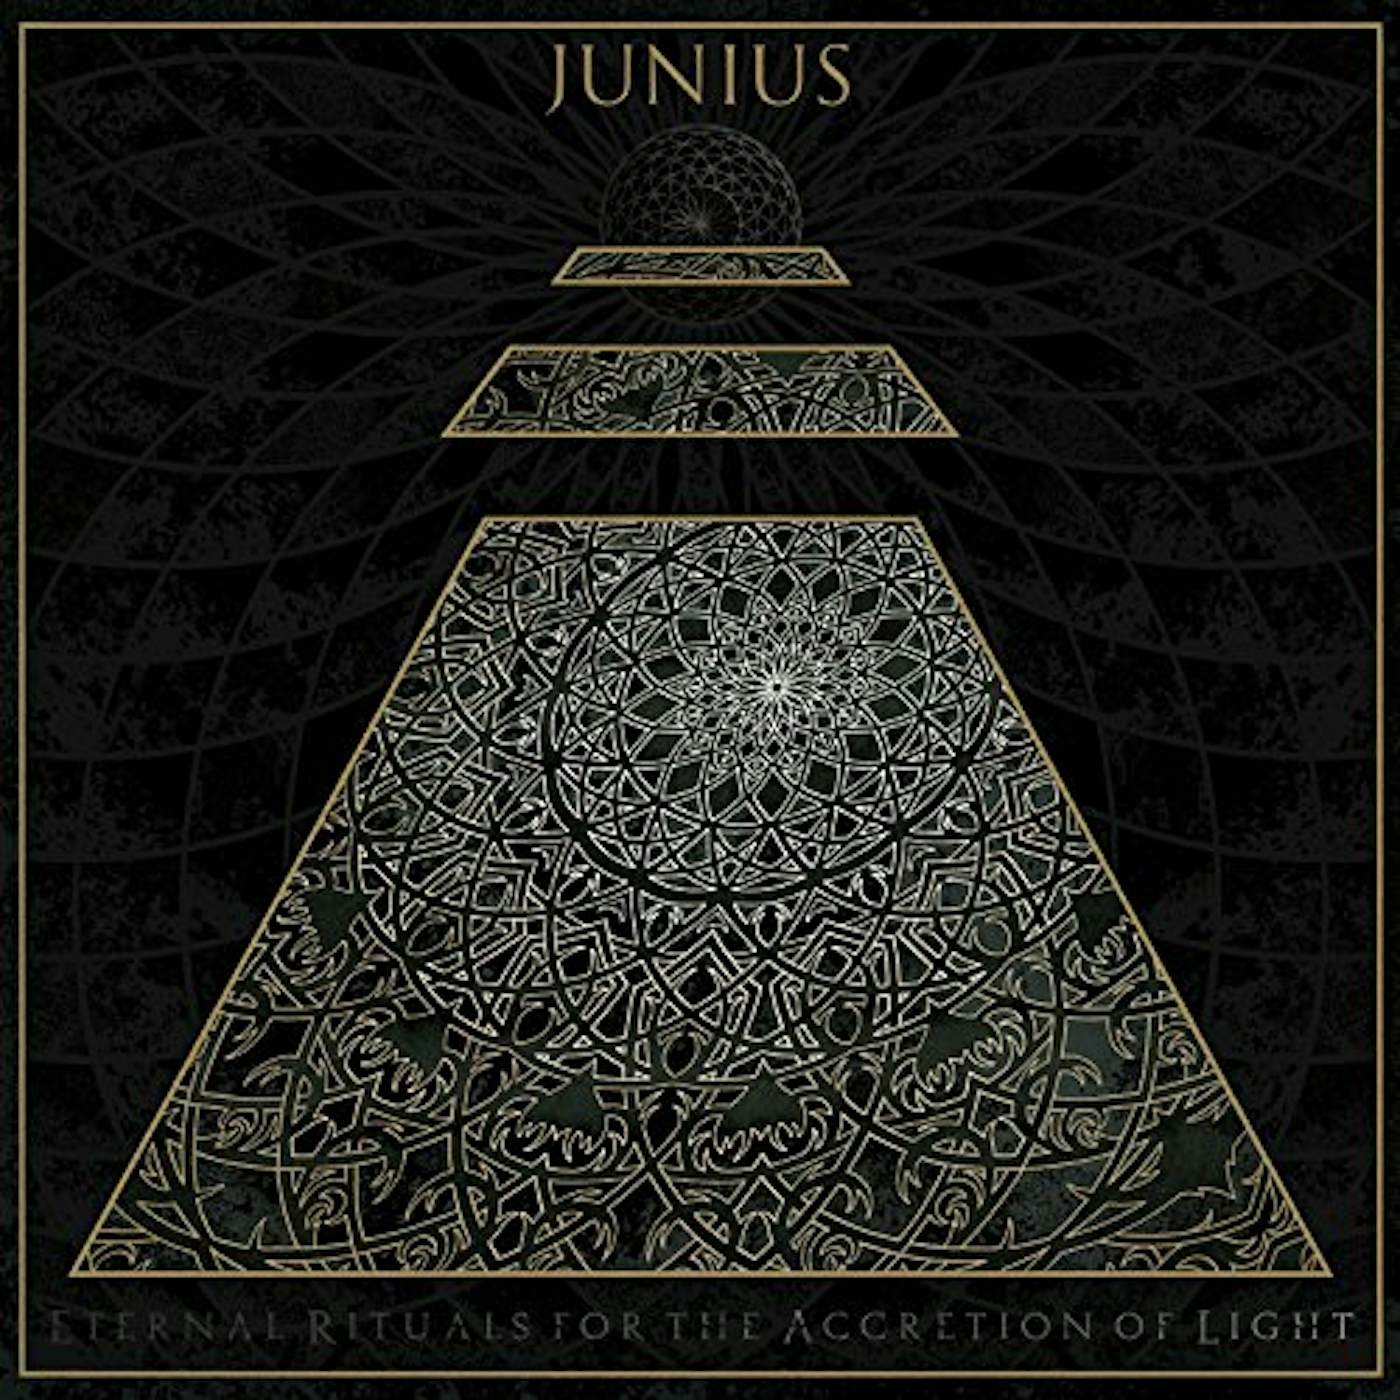 Junius Eternal Rituals for the Accretion of Light Vinyl Record